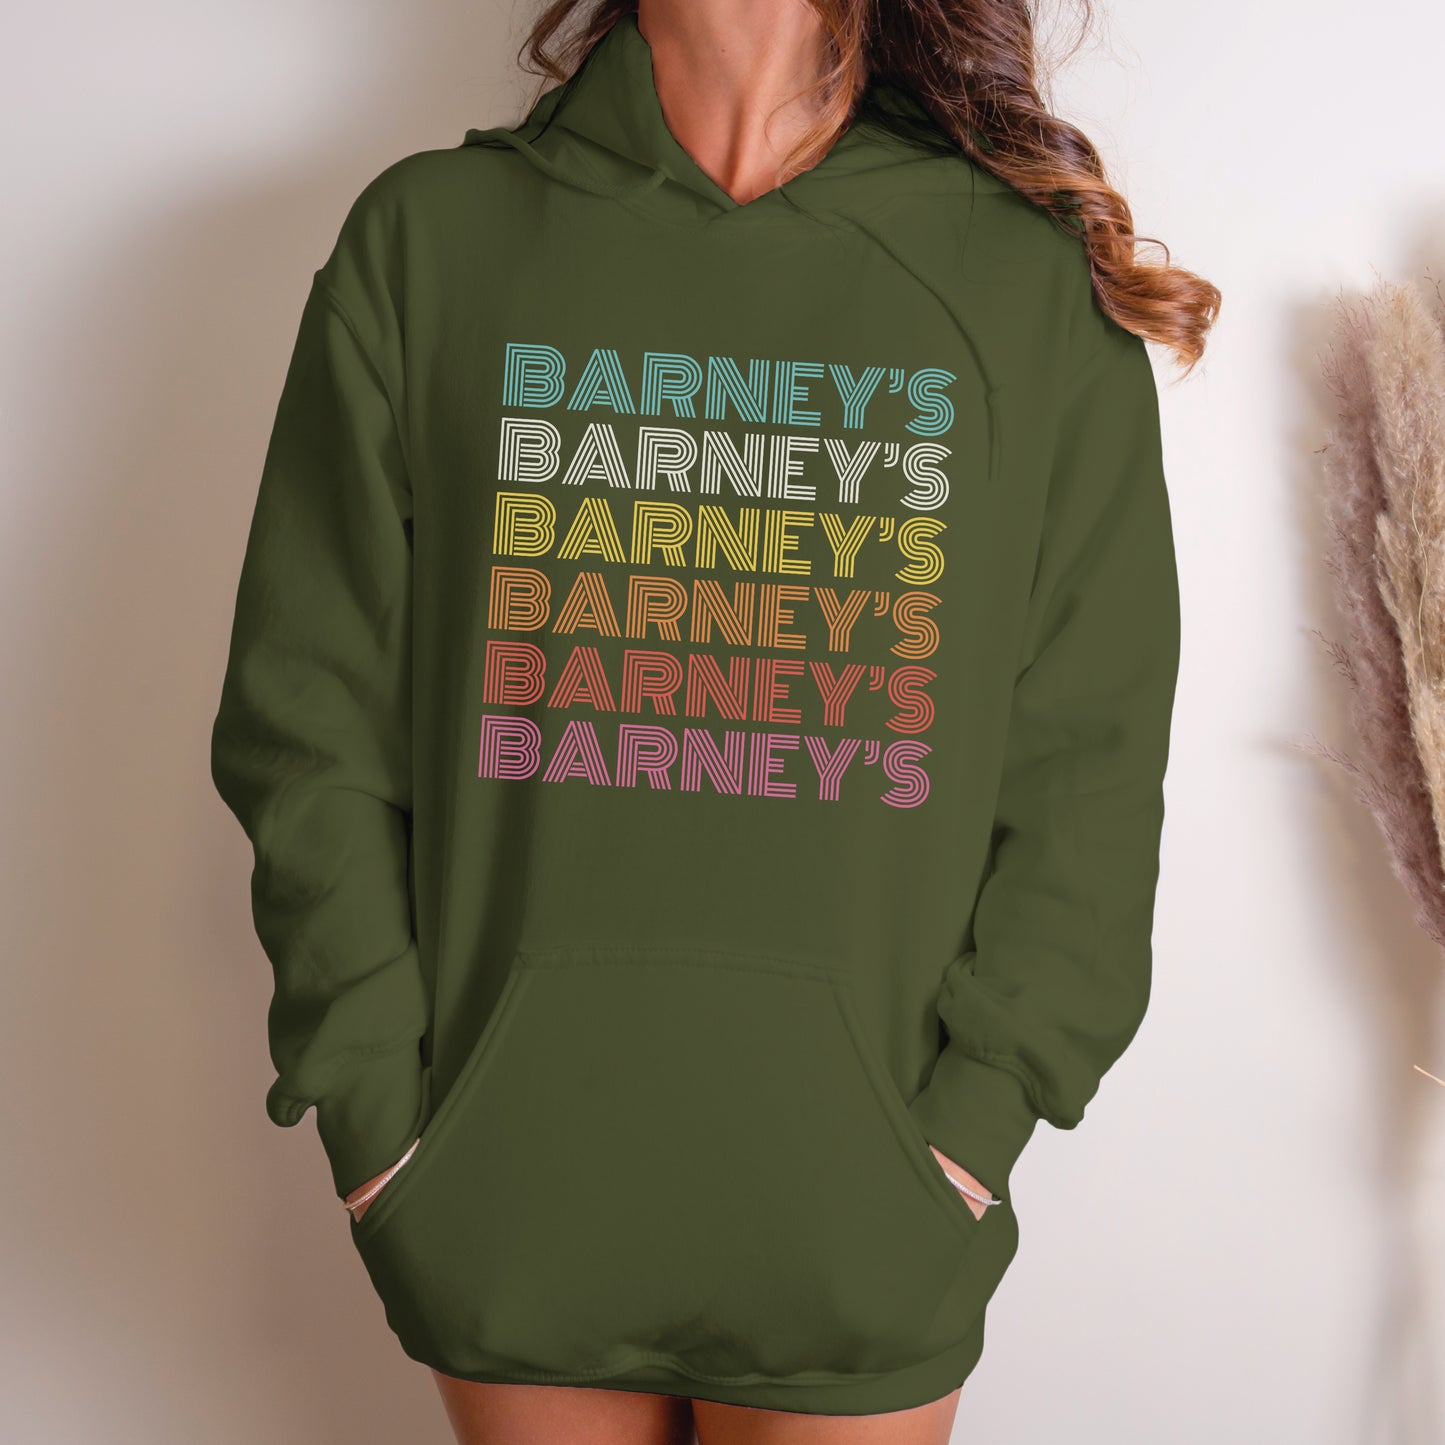 Barney's x6 Retro Hollywood | BARNEY'S BEANERY - Women's Retro Graphic Hoodie | Rainbow Retro Graphics On Military Green Gildan 18500 Hoodie, Front View Female Lifestyle Image